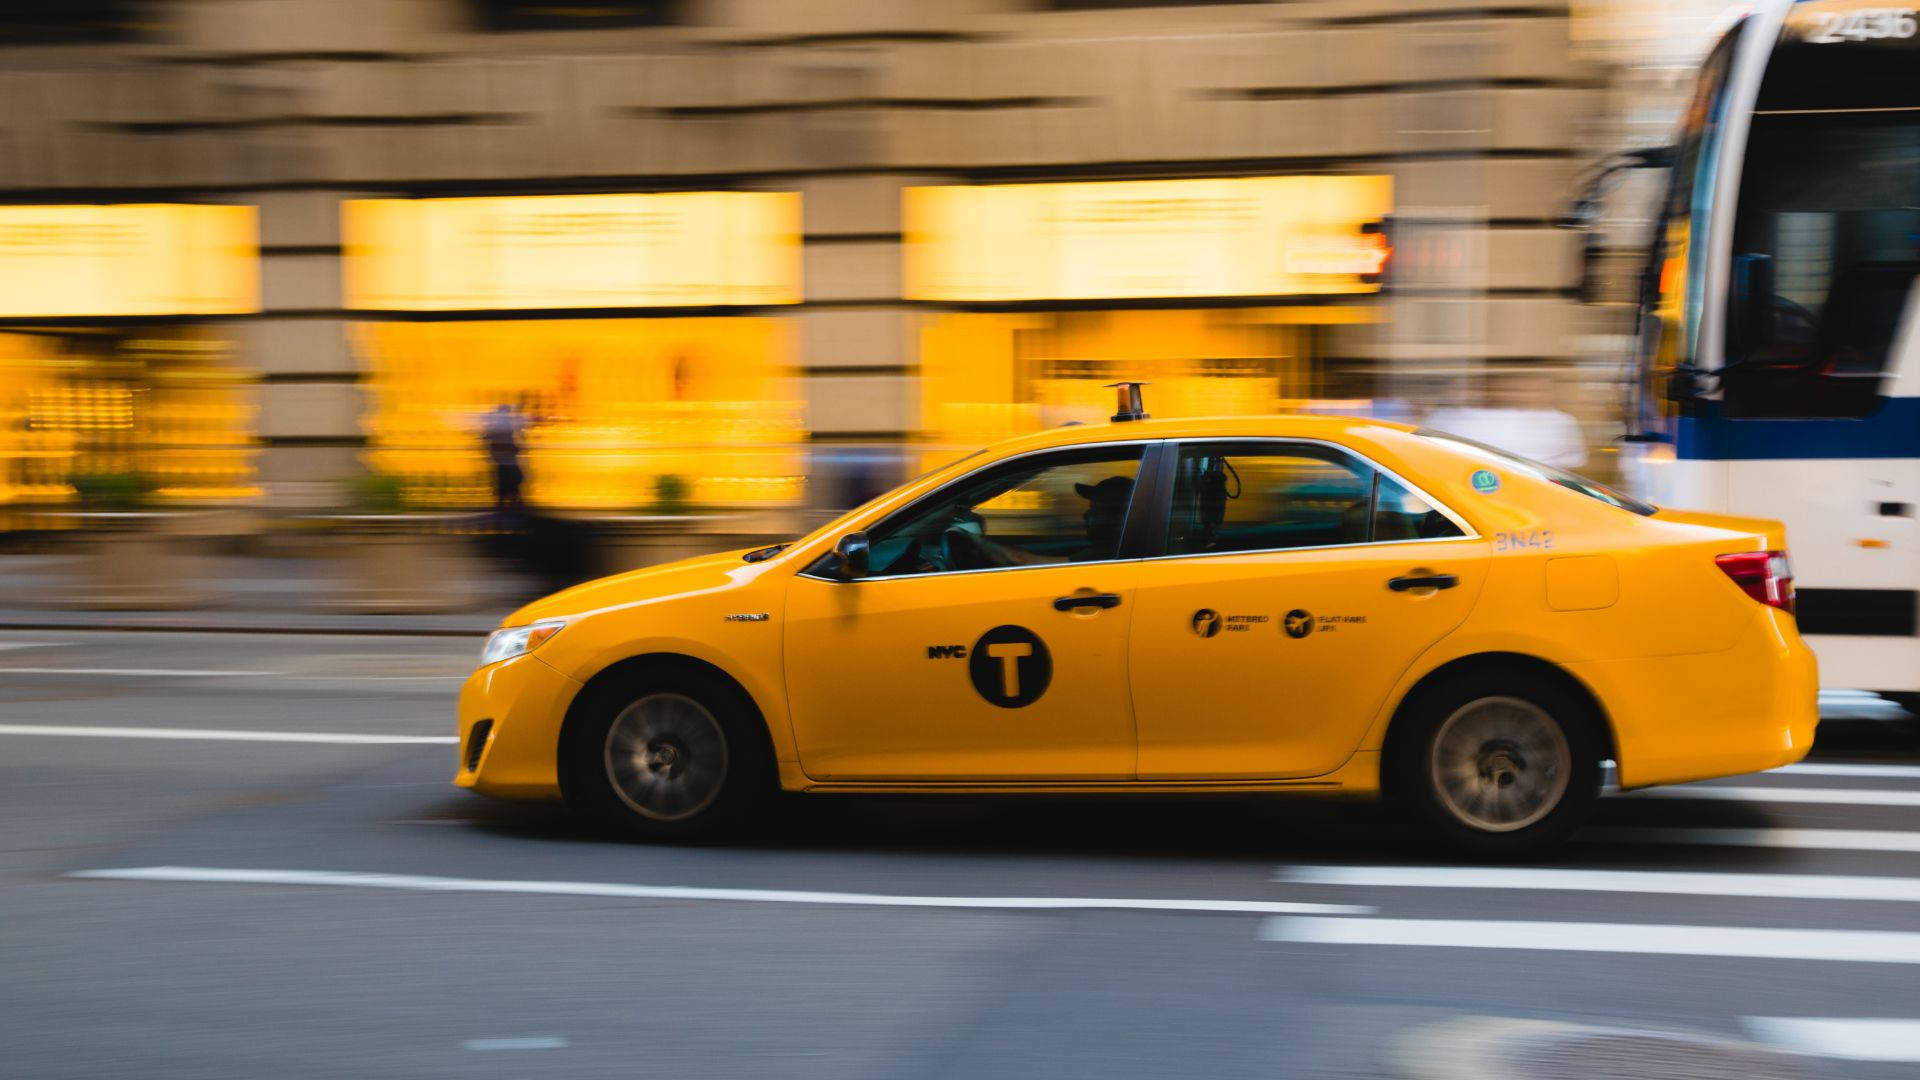 Gul Taxa Cab Motion Blur Wallpaper Wallpaper